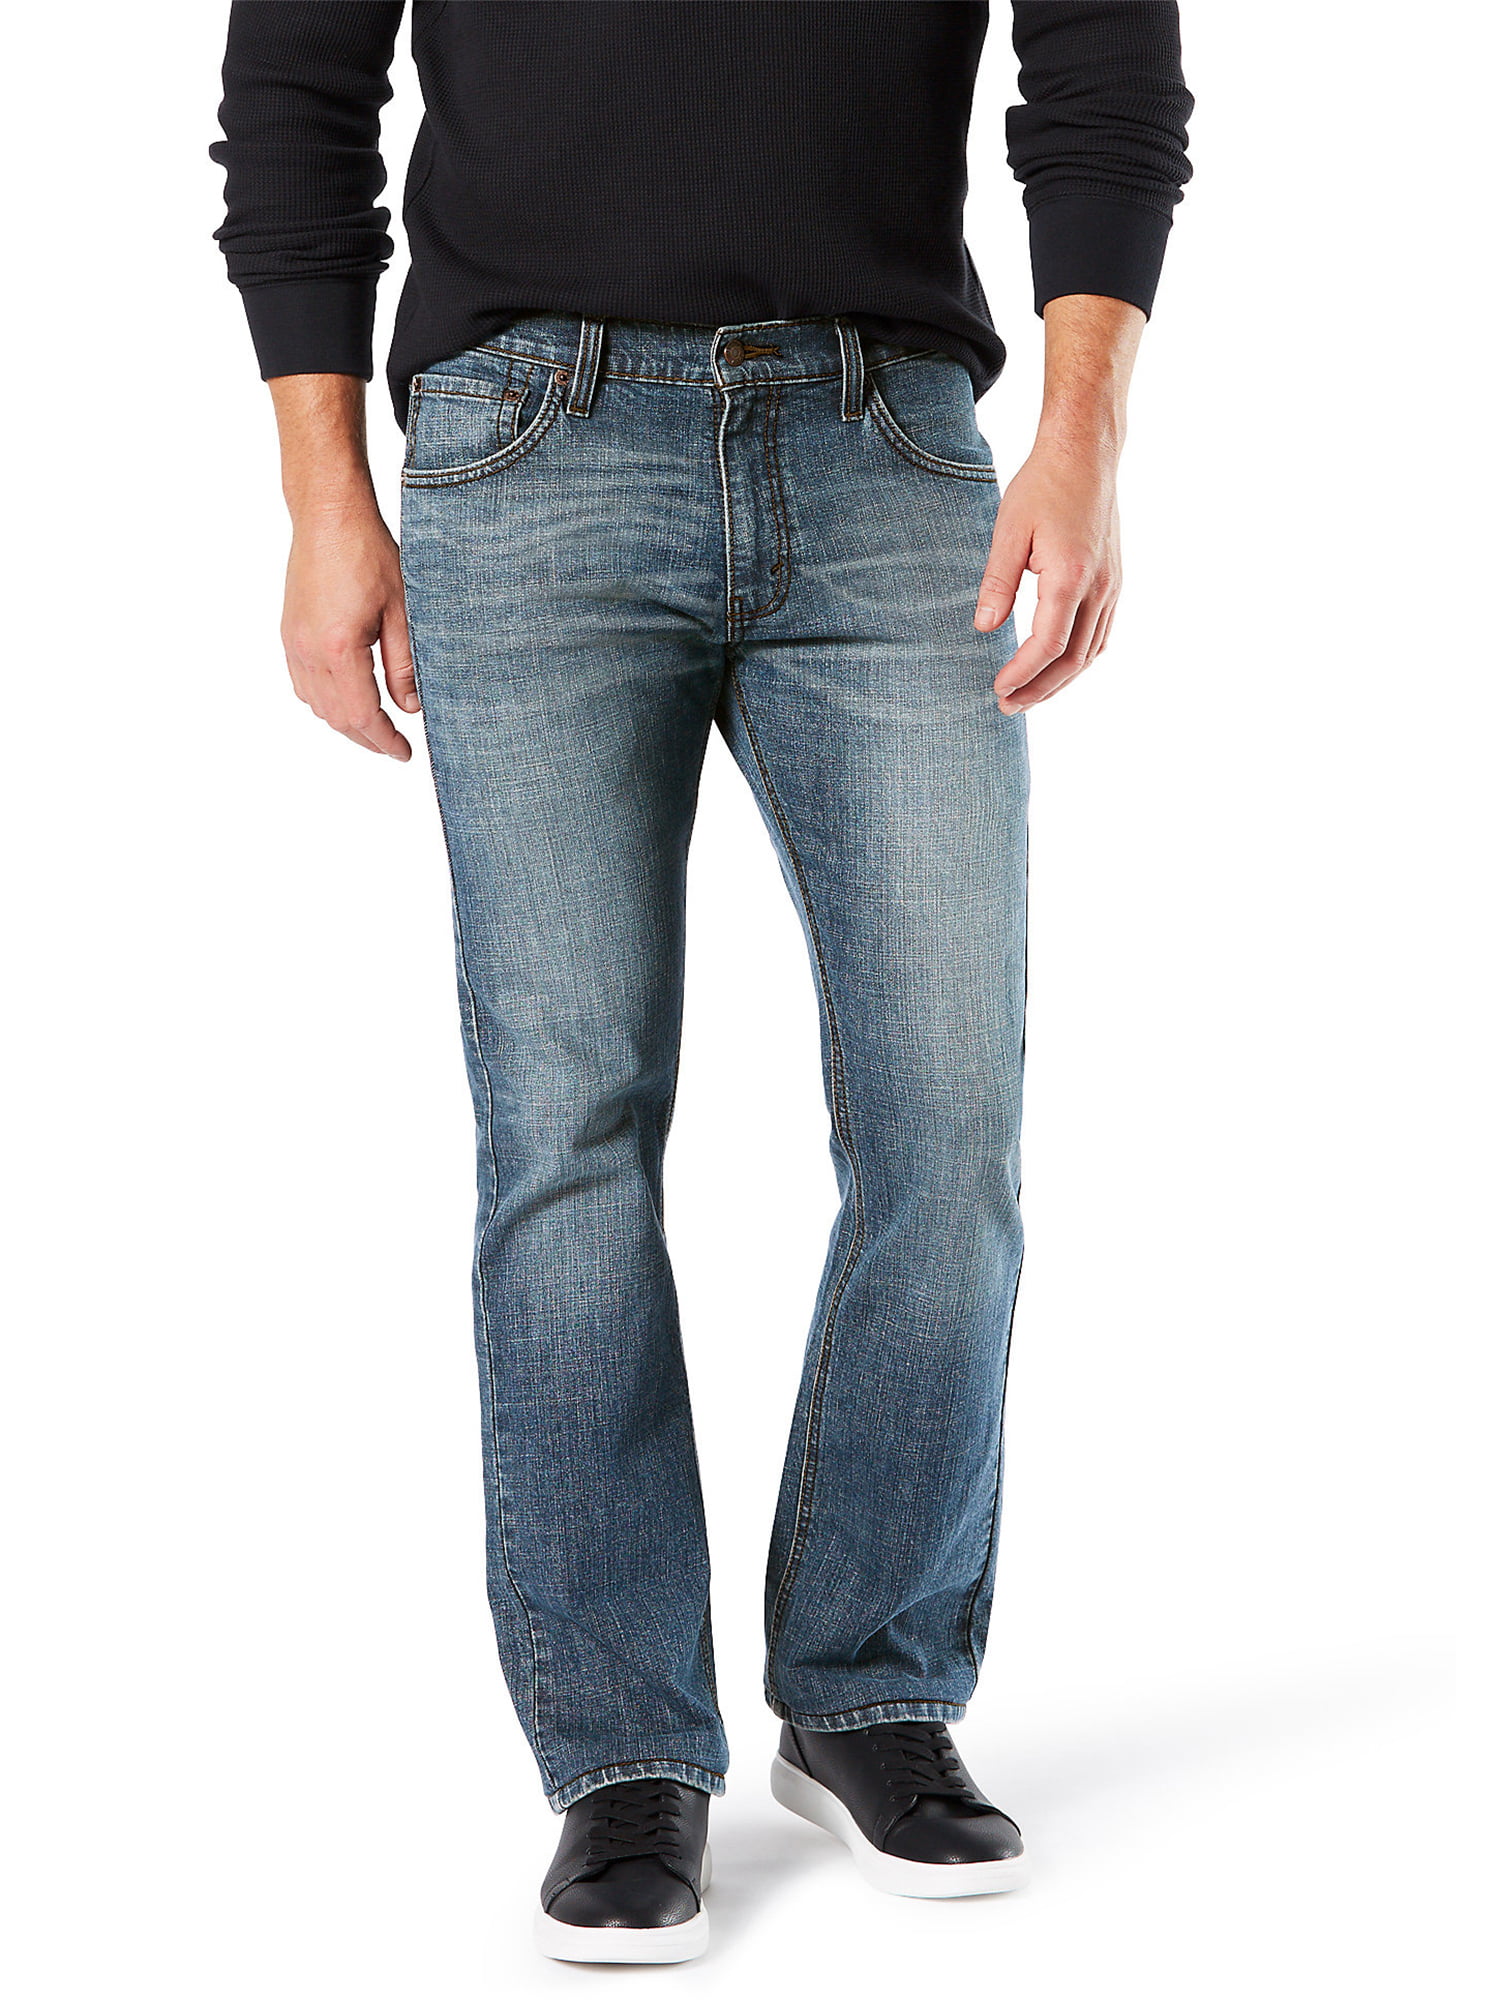 levi strauss signature bootcut jeans mens